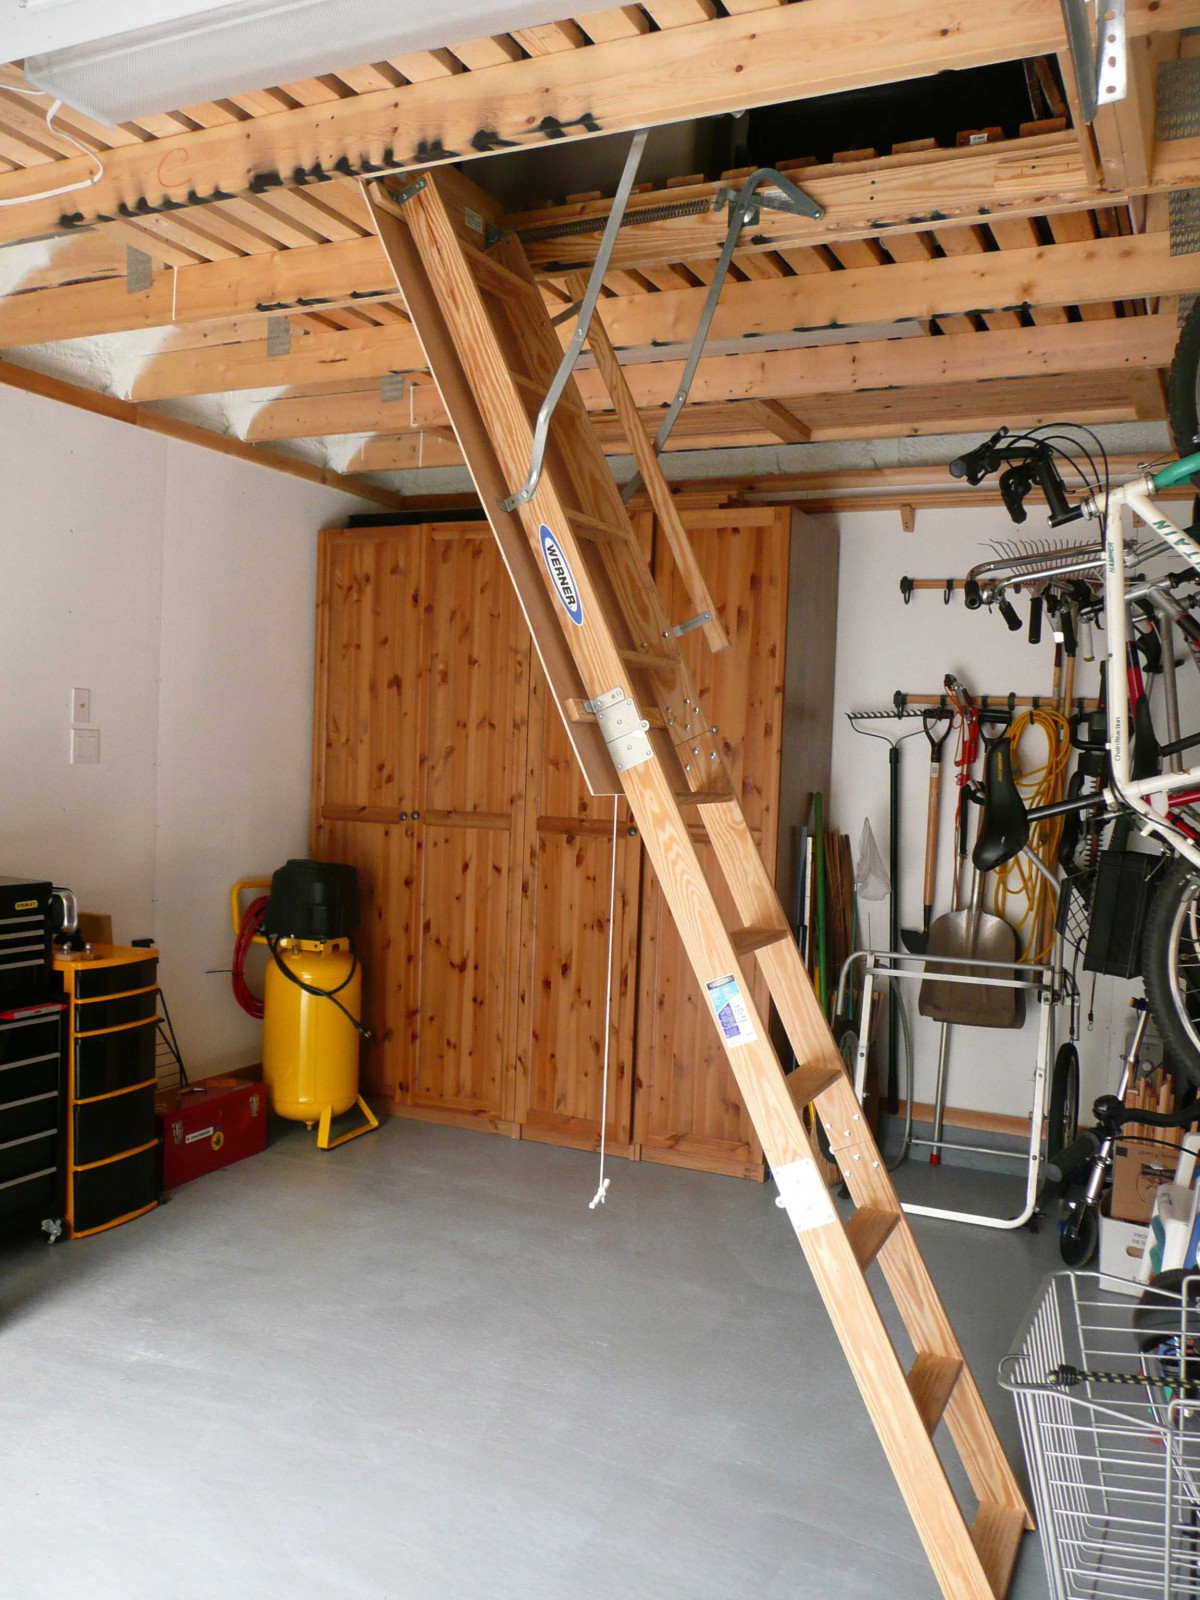 Highland DIY garage plan 14  x  20 in backyard with metal doors seen from inside.ID number 3361-5.